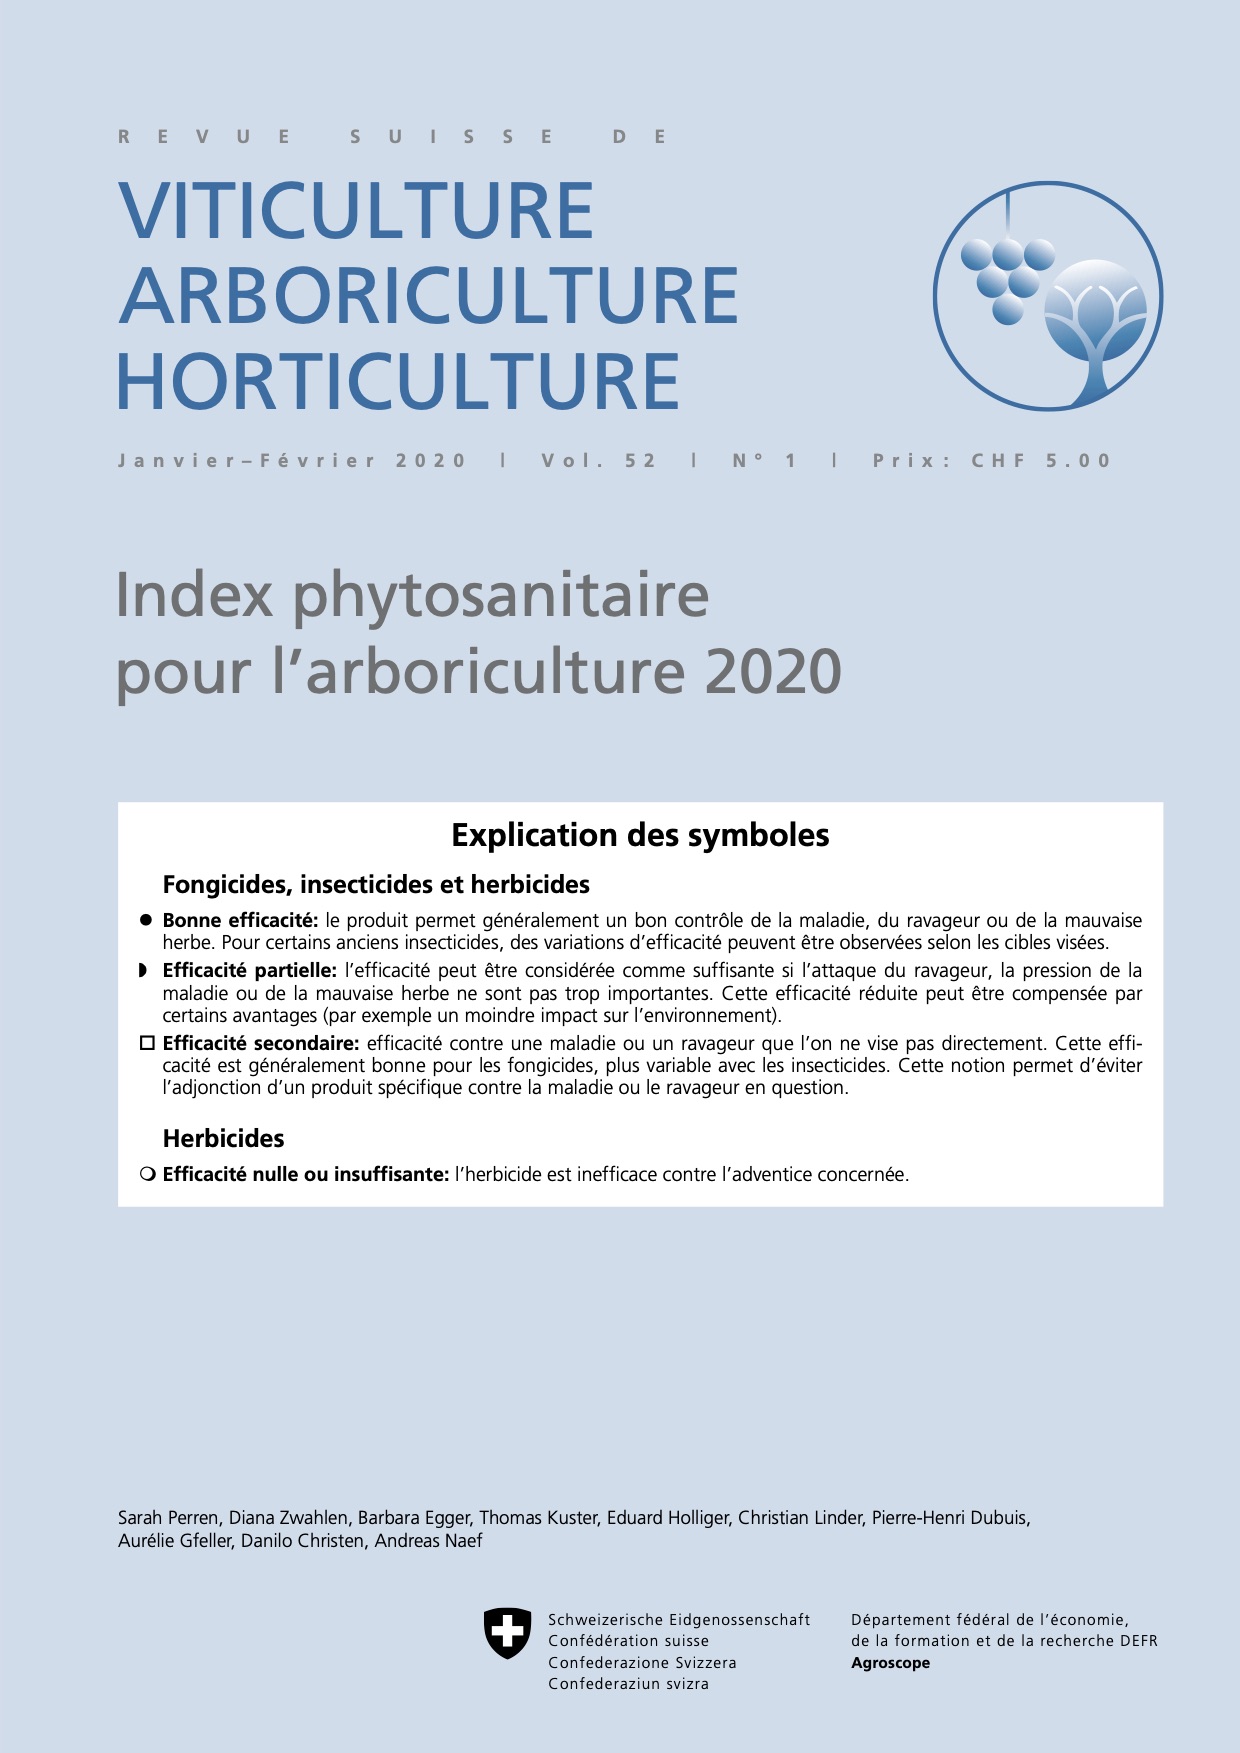 Index phytosanitaire pour l'arboriculture 2020